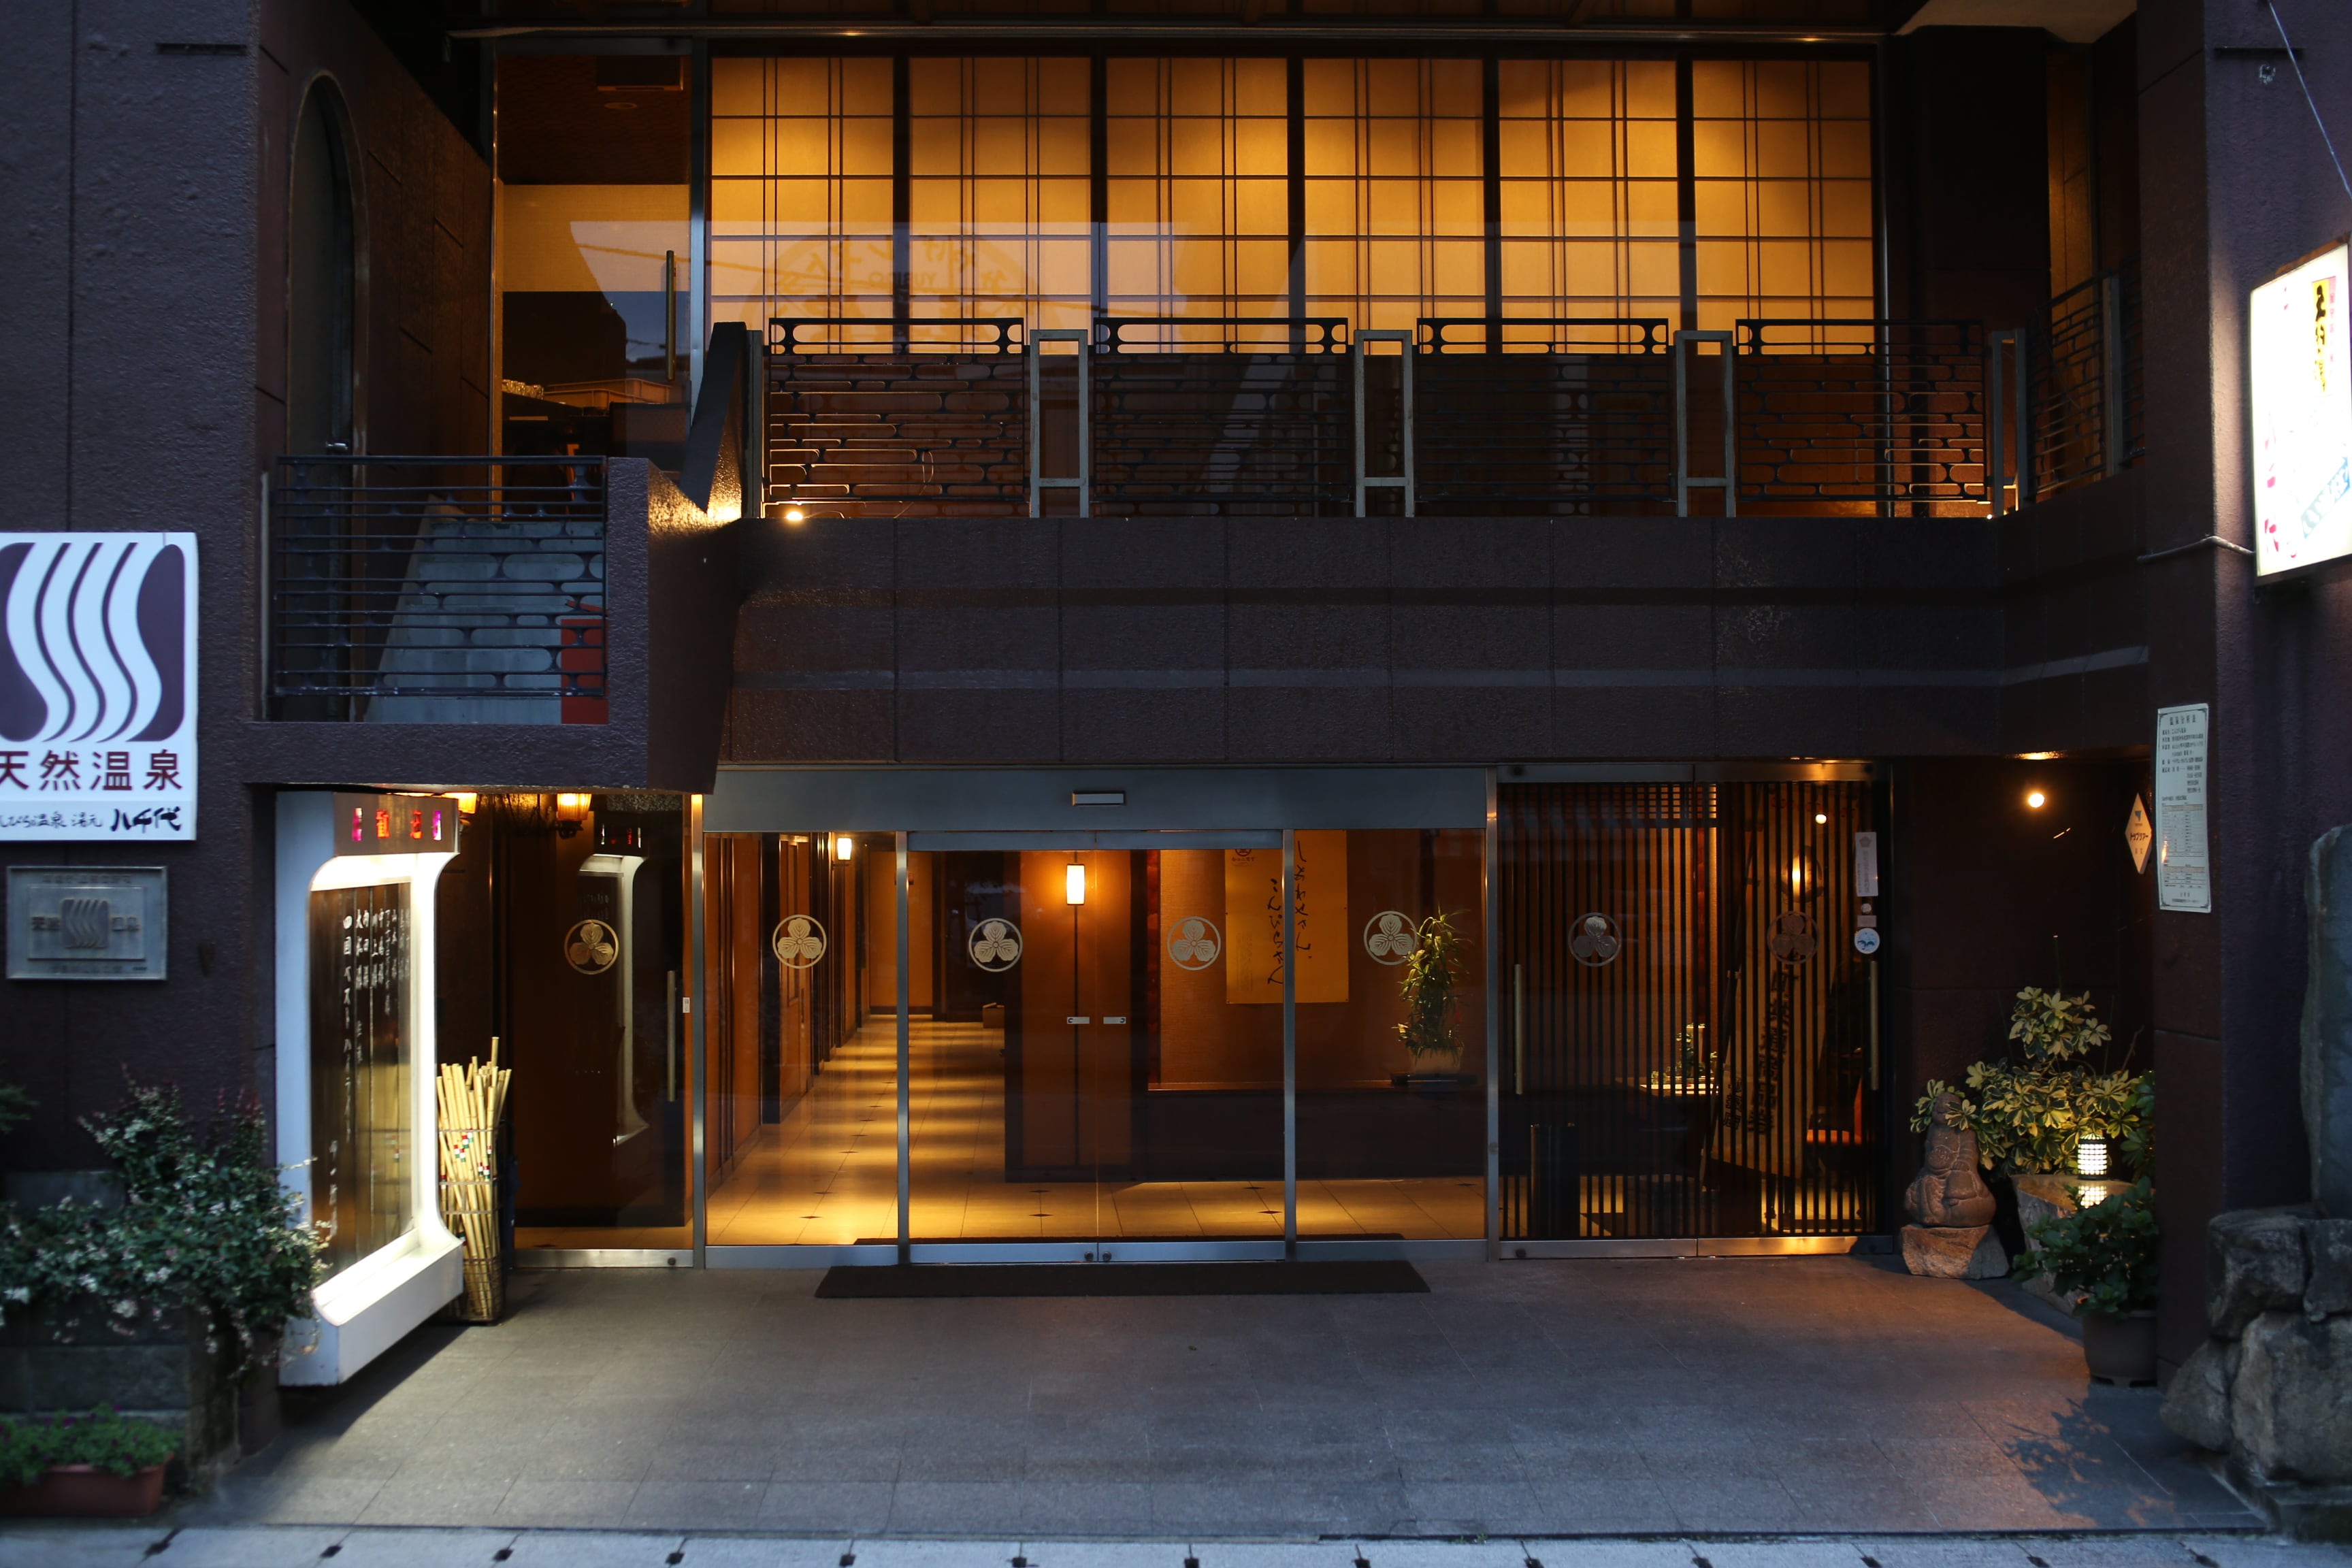 Pintu masuk Gedung Utama Yachiyo. Penginapan tertua di Kotohira yang telah berdiri sejak zaman Edo